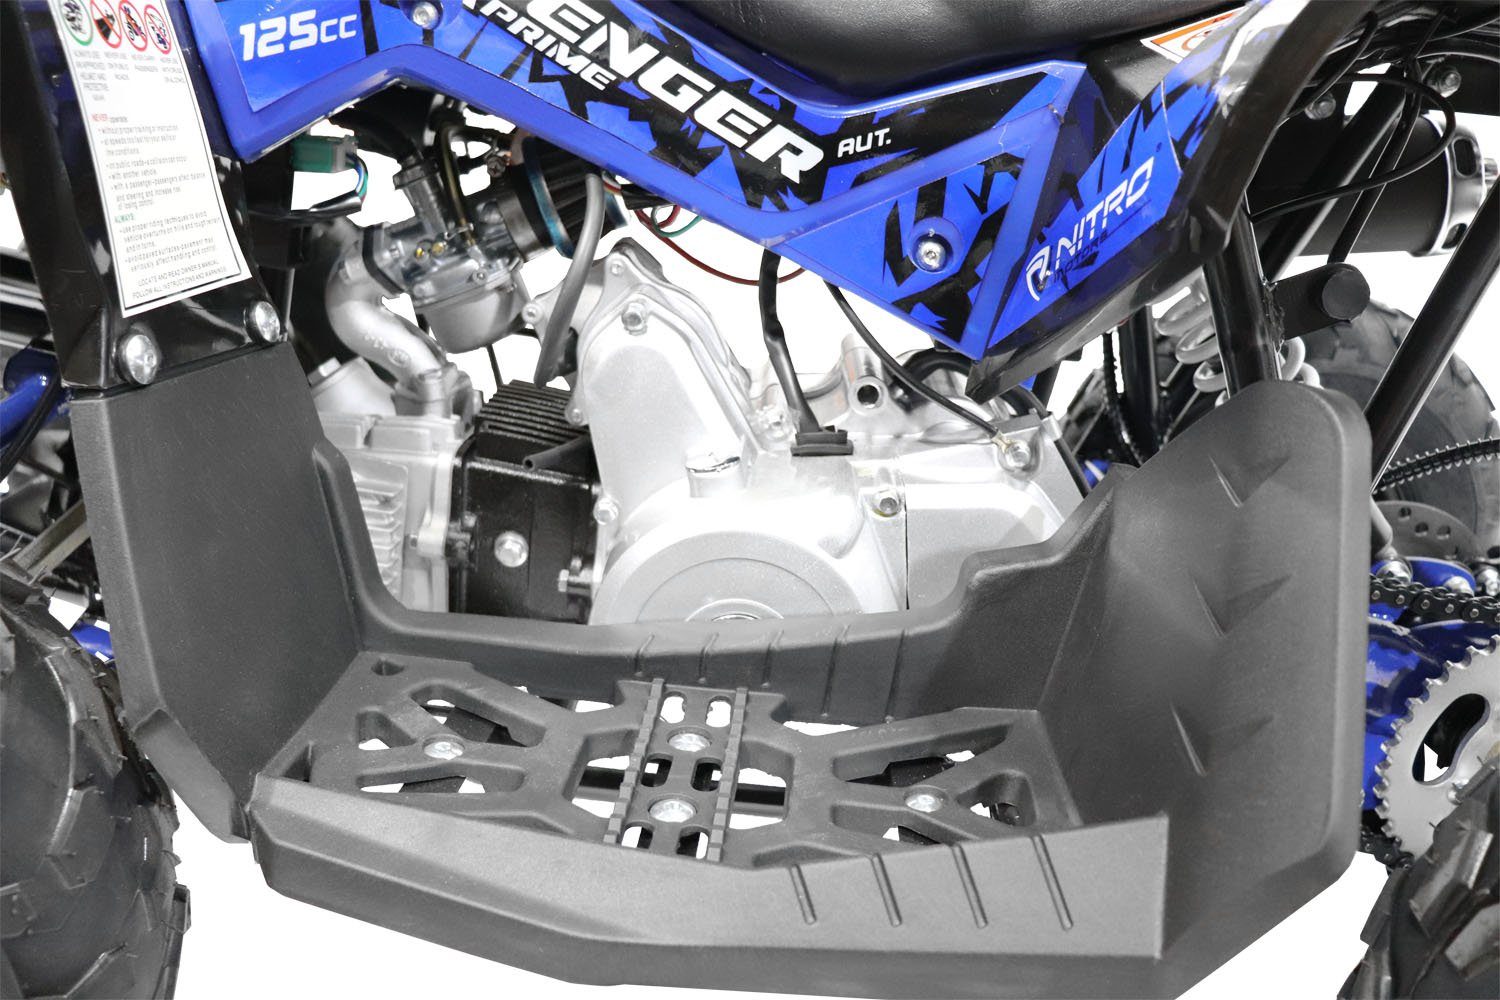 Nitro Motors Midiquad, Kinder Quad Quad RG6-A 125,00 Kinderquad Avenger ccm Blau midi 125cc